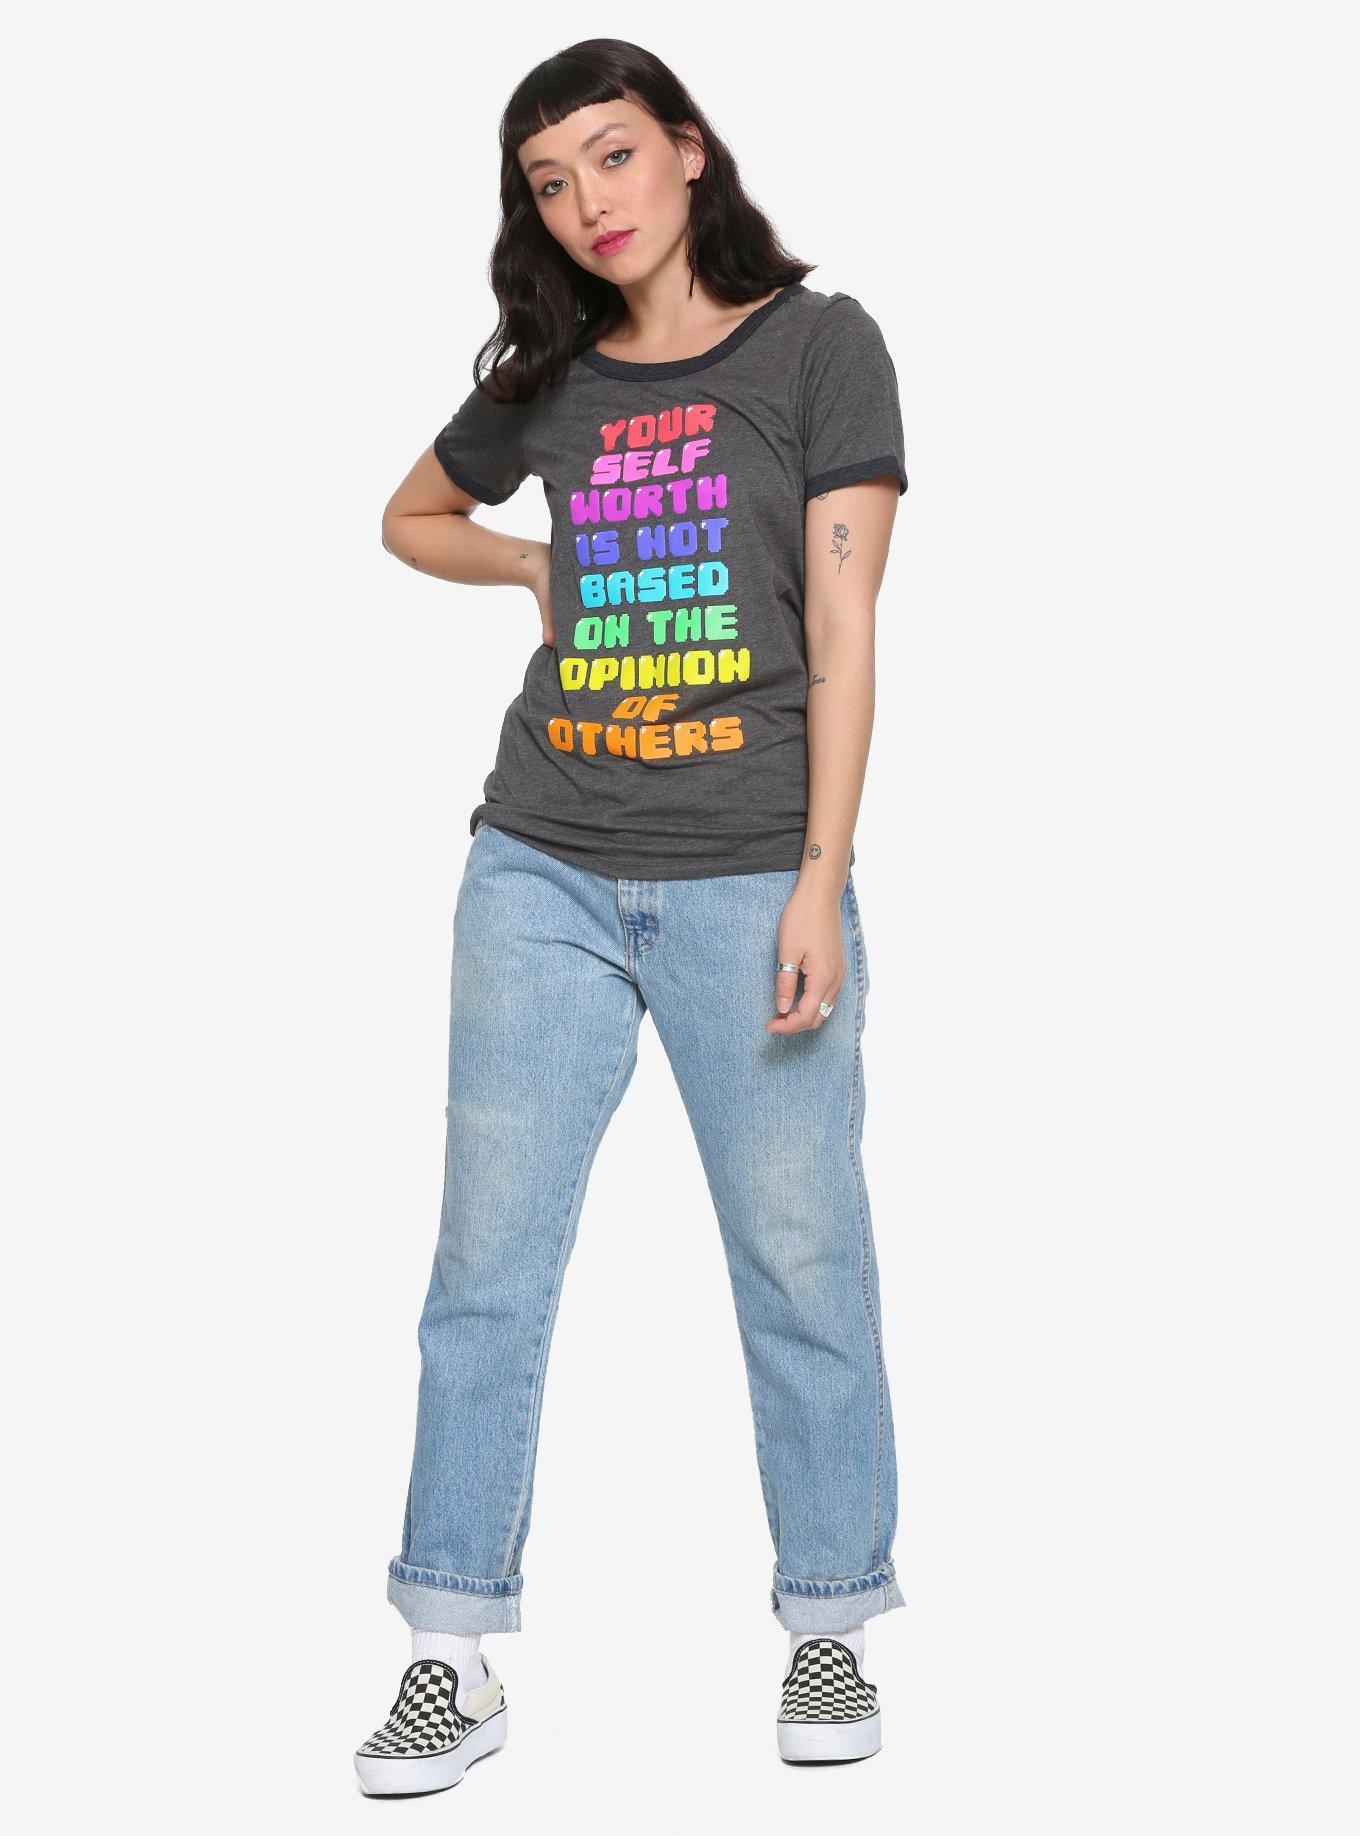 Jessie Paege Rainbow Self Worth Girls T-Shirt Hot Topic Exclusive, , alternate